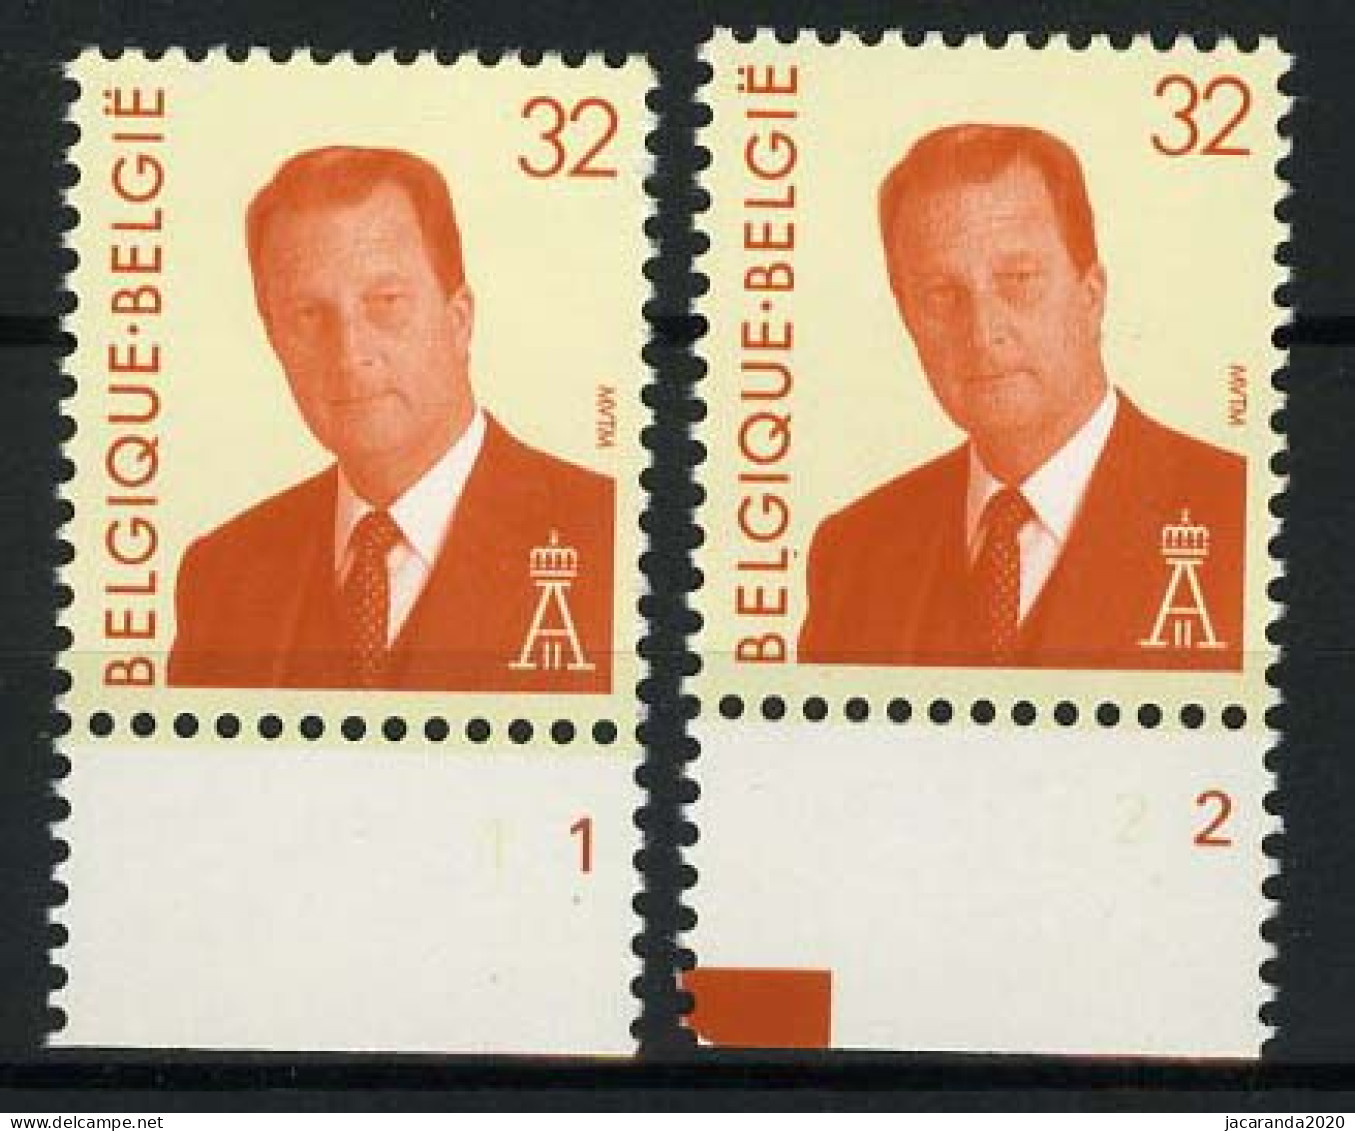 België 2537 - Koning Albert II - Plnr 1-2 - 1991-2000